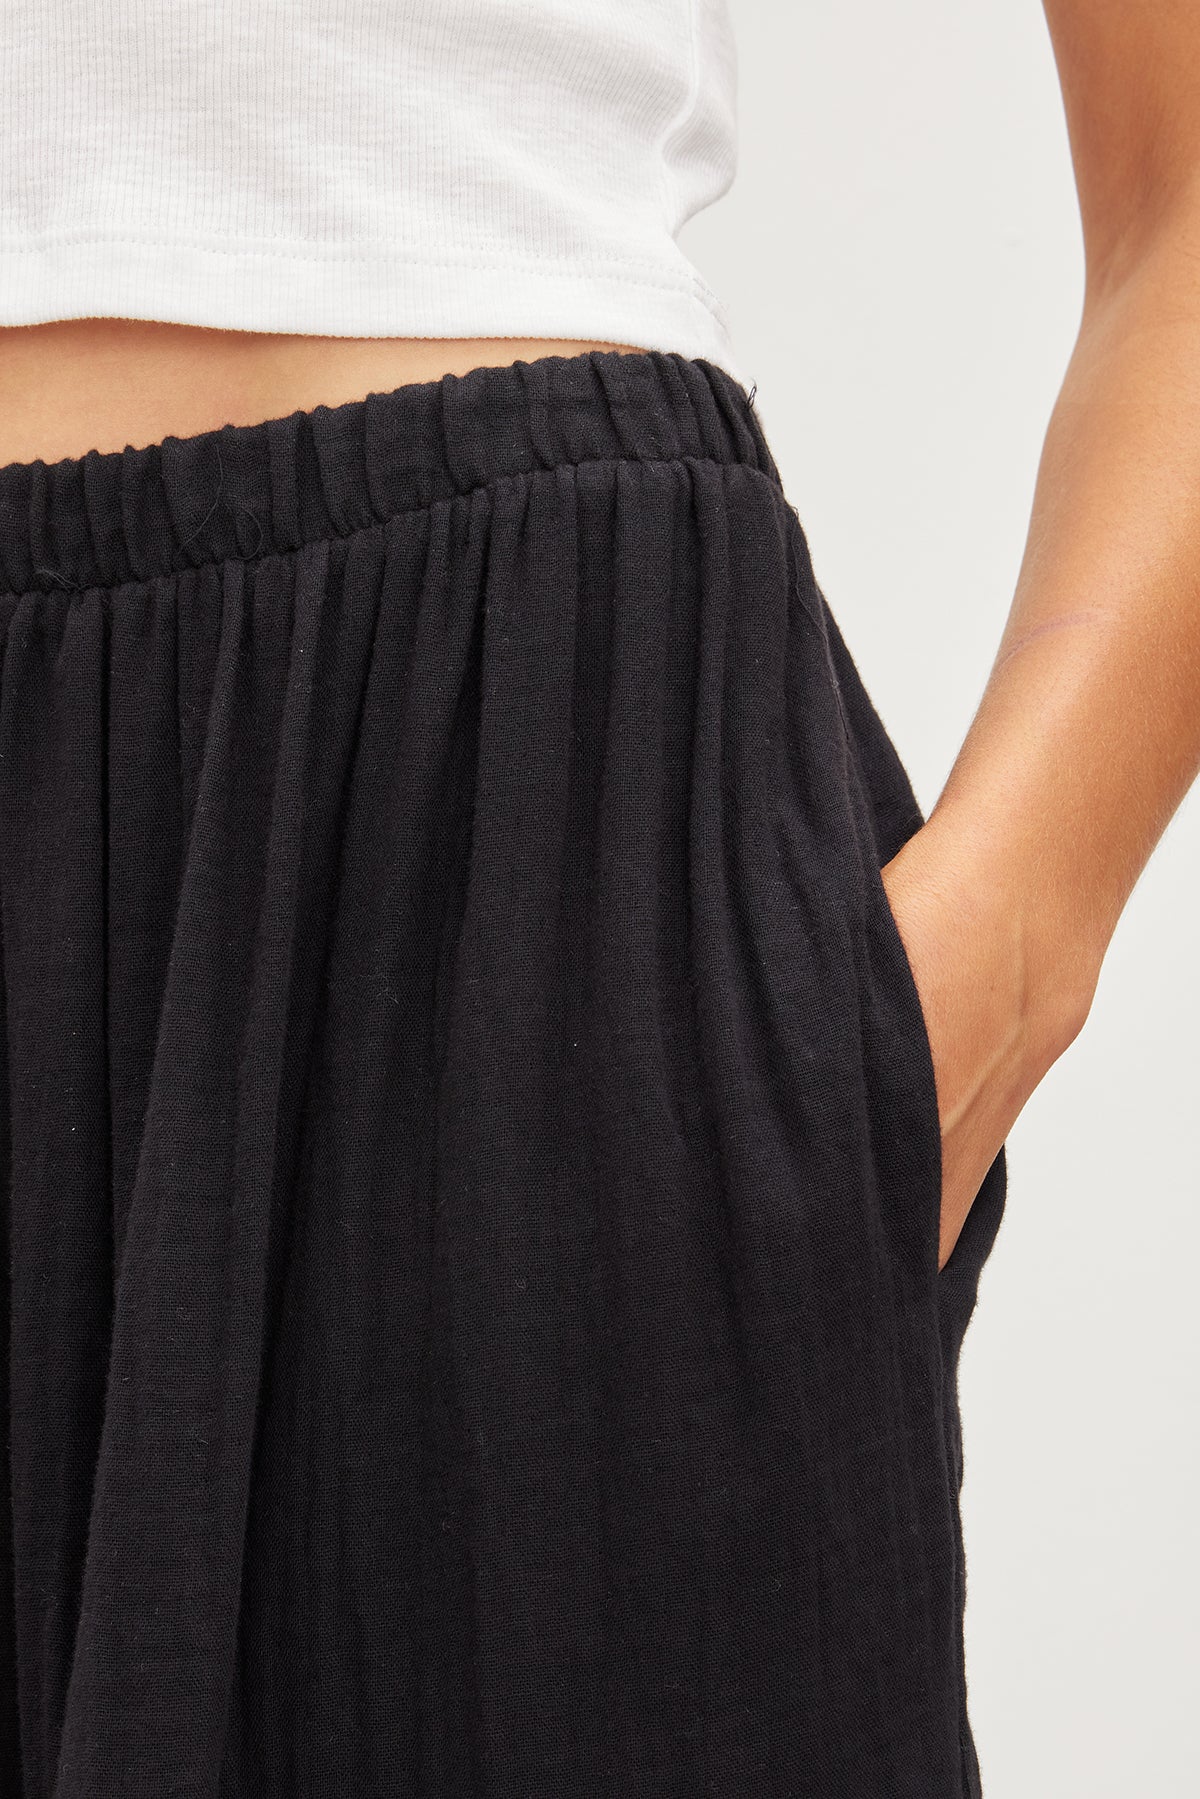 A woman wearing a Velvet by Graham & Spencer Danielle Cotton Gauze Tiered Skirt with an elastic waist.-35955694108865